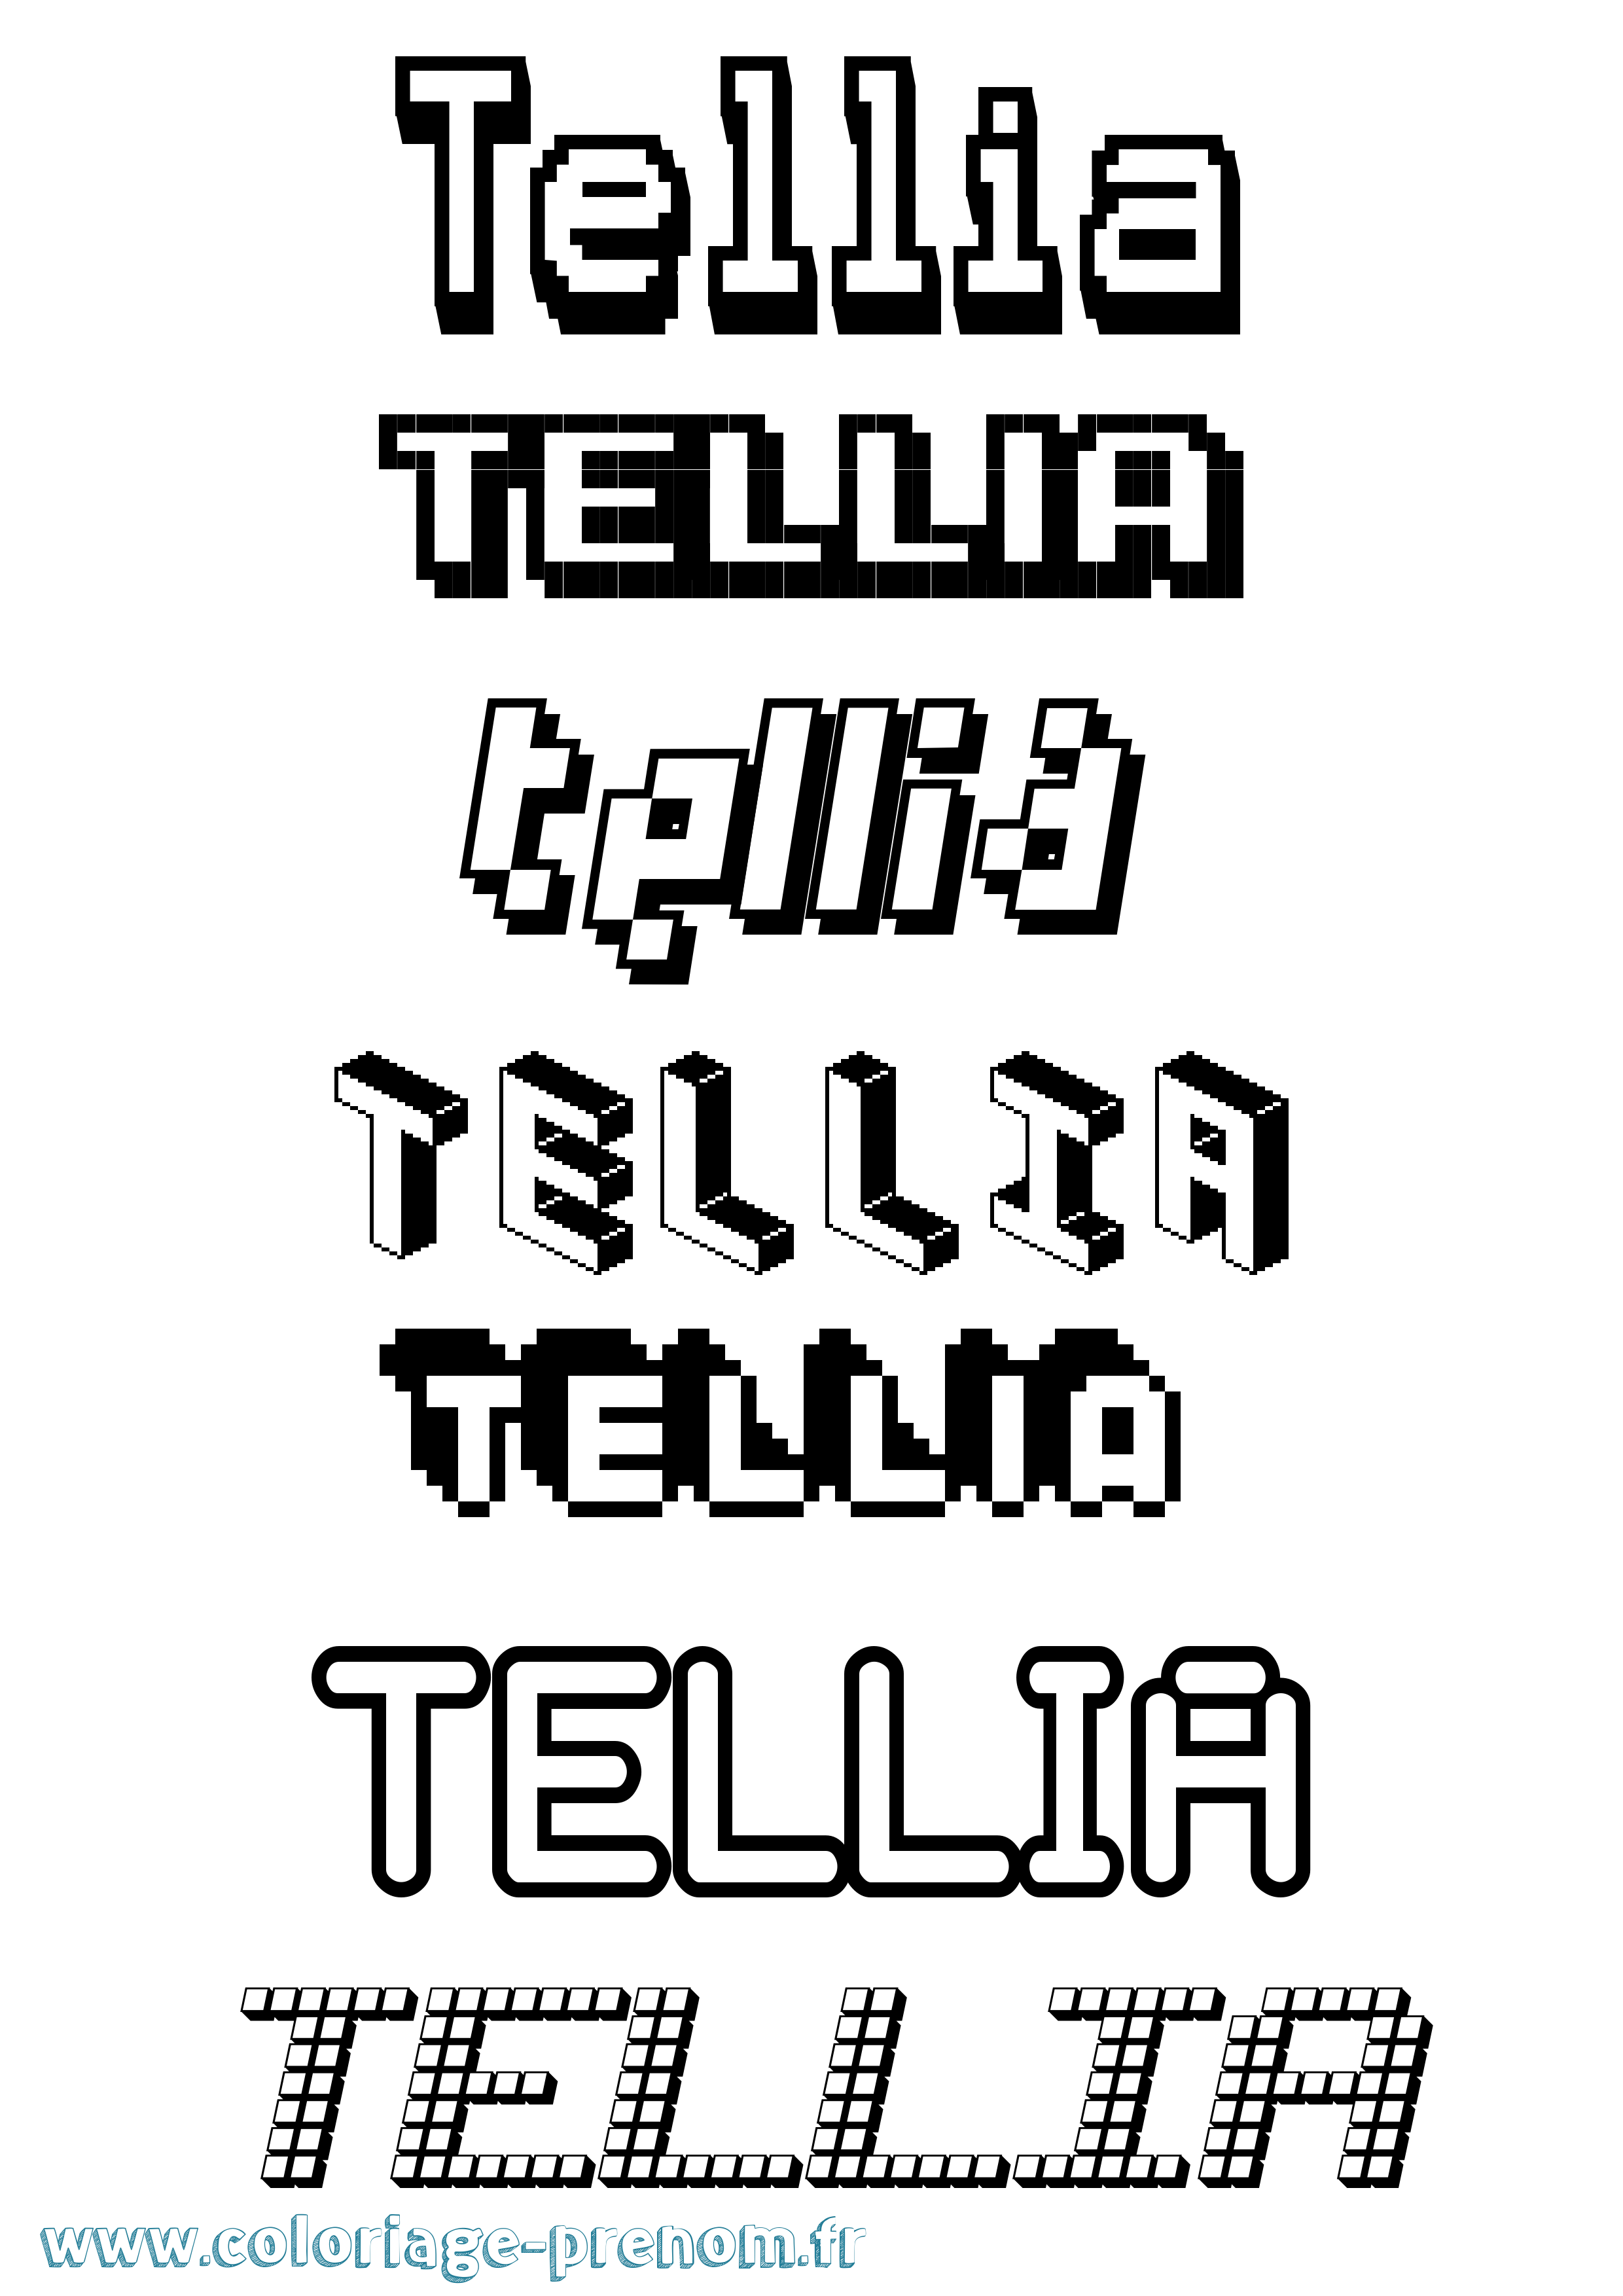 Coloriage prénom Tellia Pixel